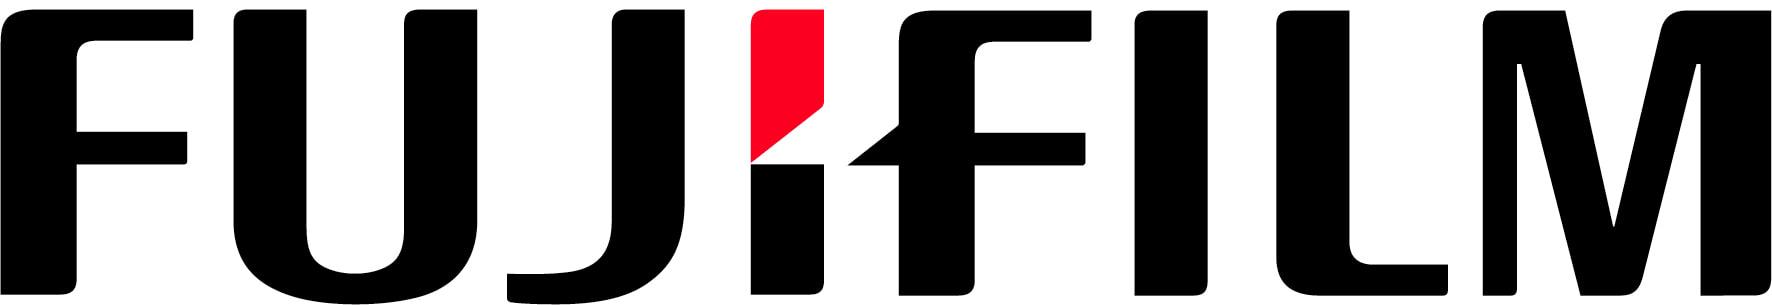 Fuji Xerox authorised dealer logo